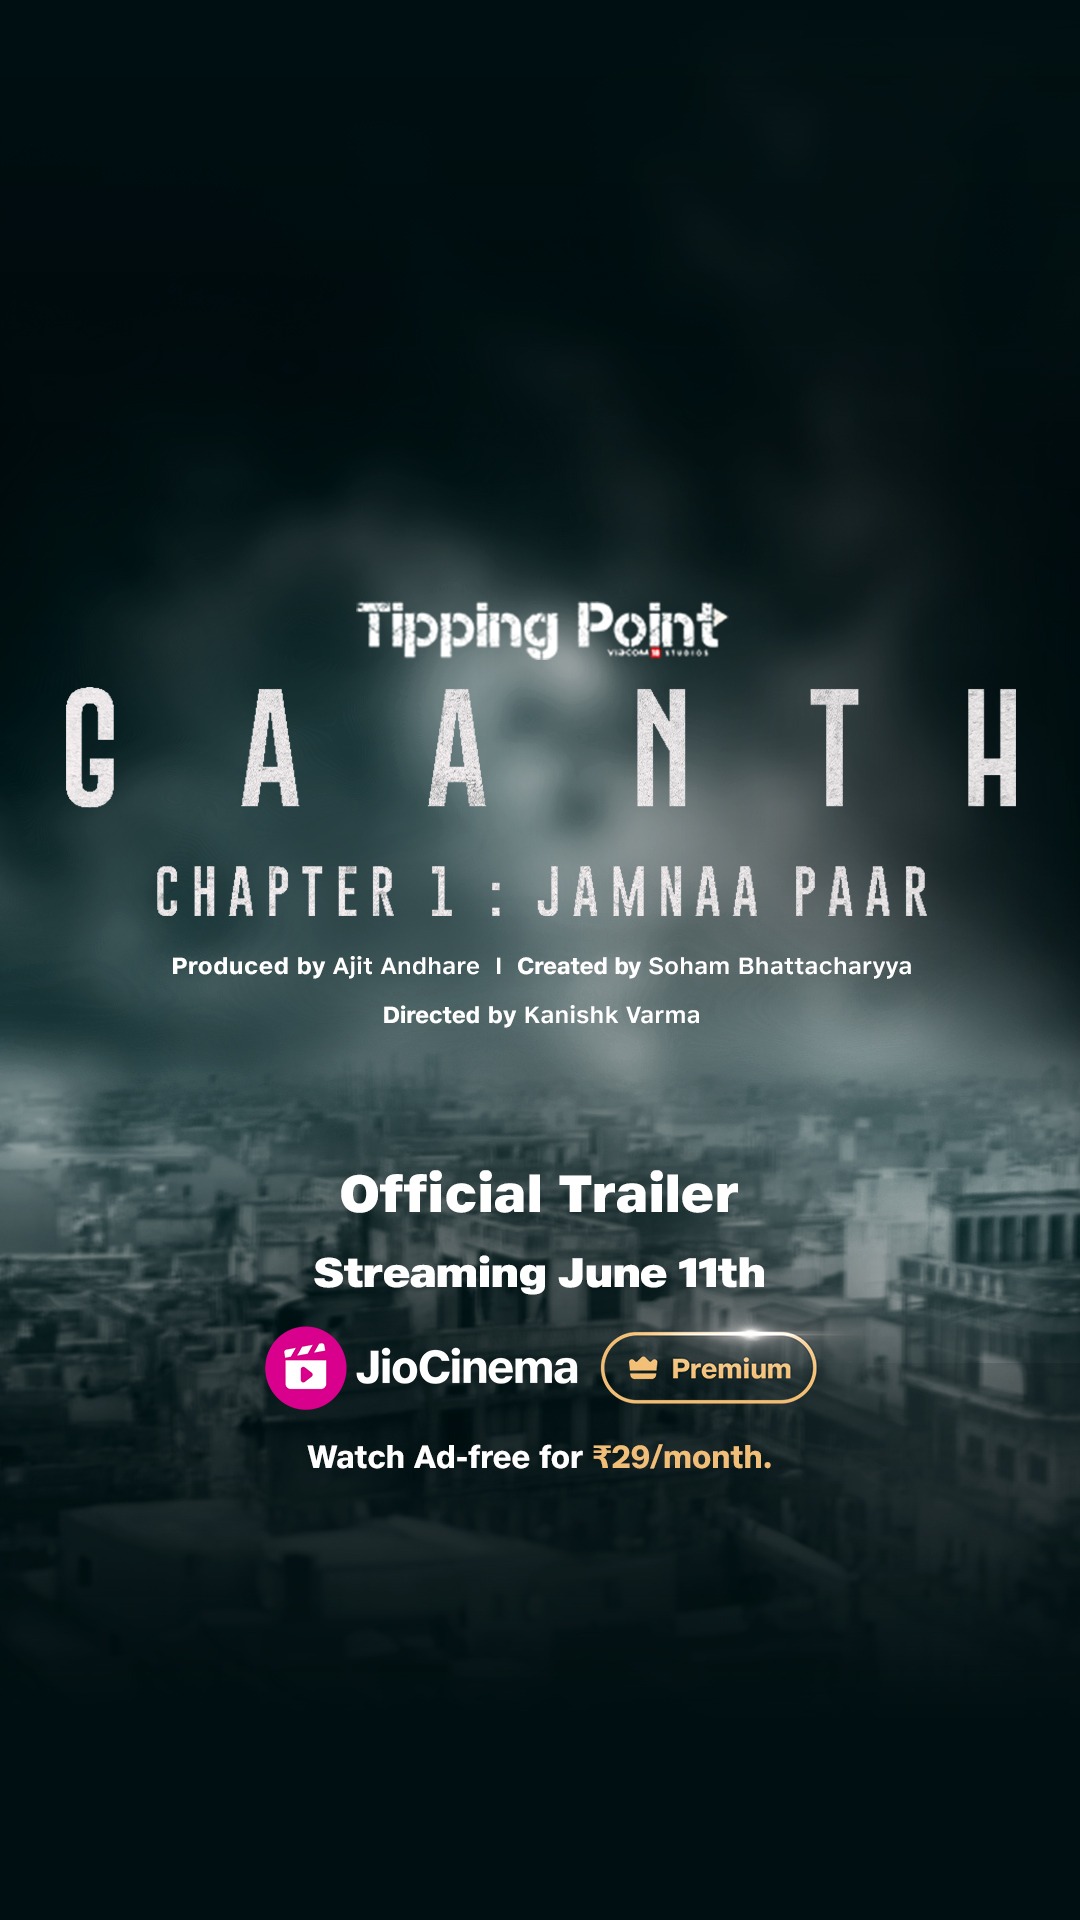 JioCinema Premium to launch intense murder mystery series ‘Gaanth’ on 11th June!